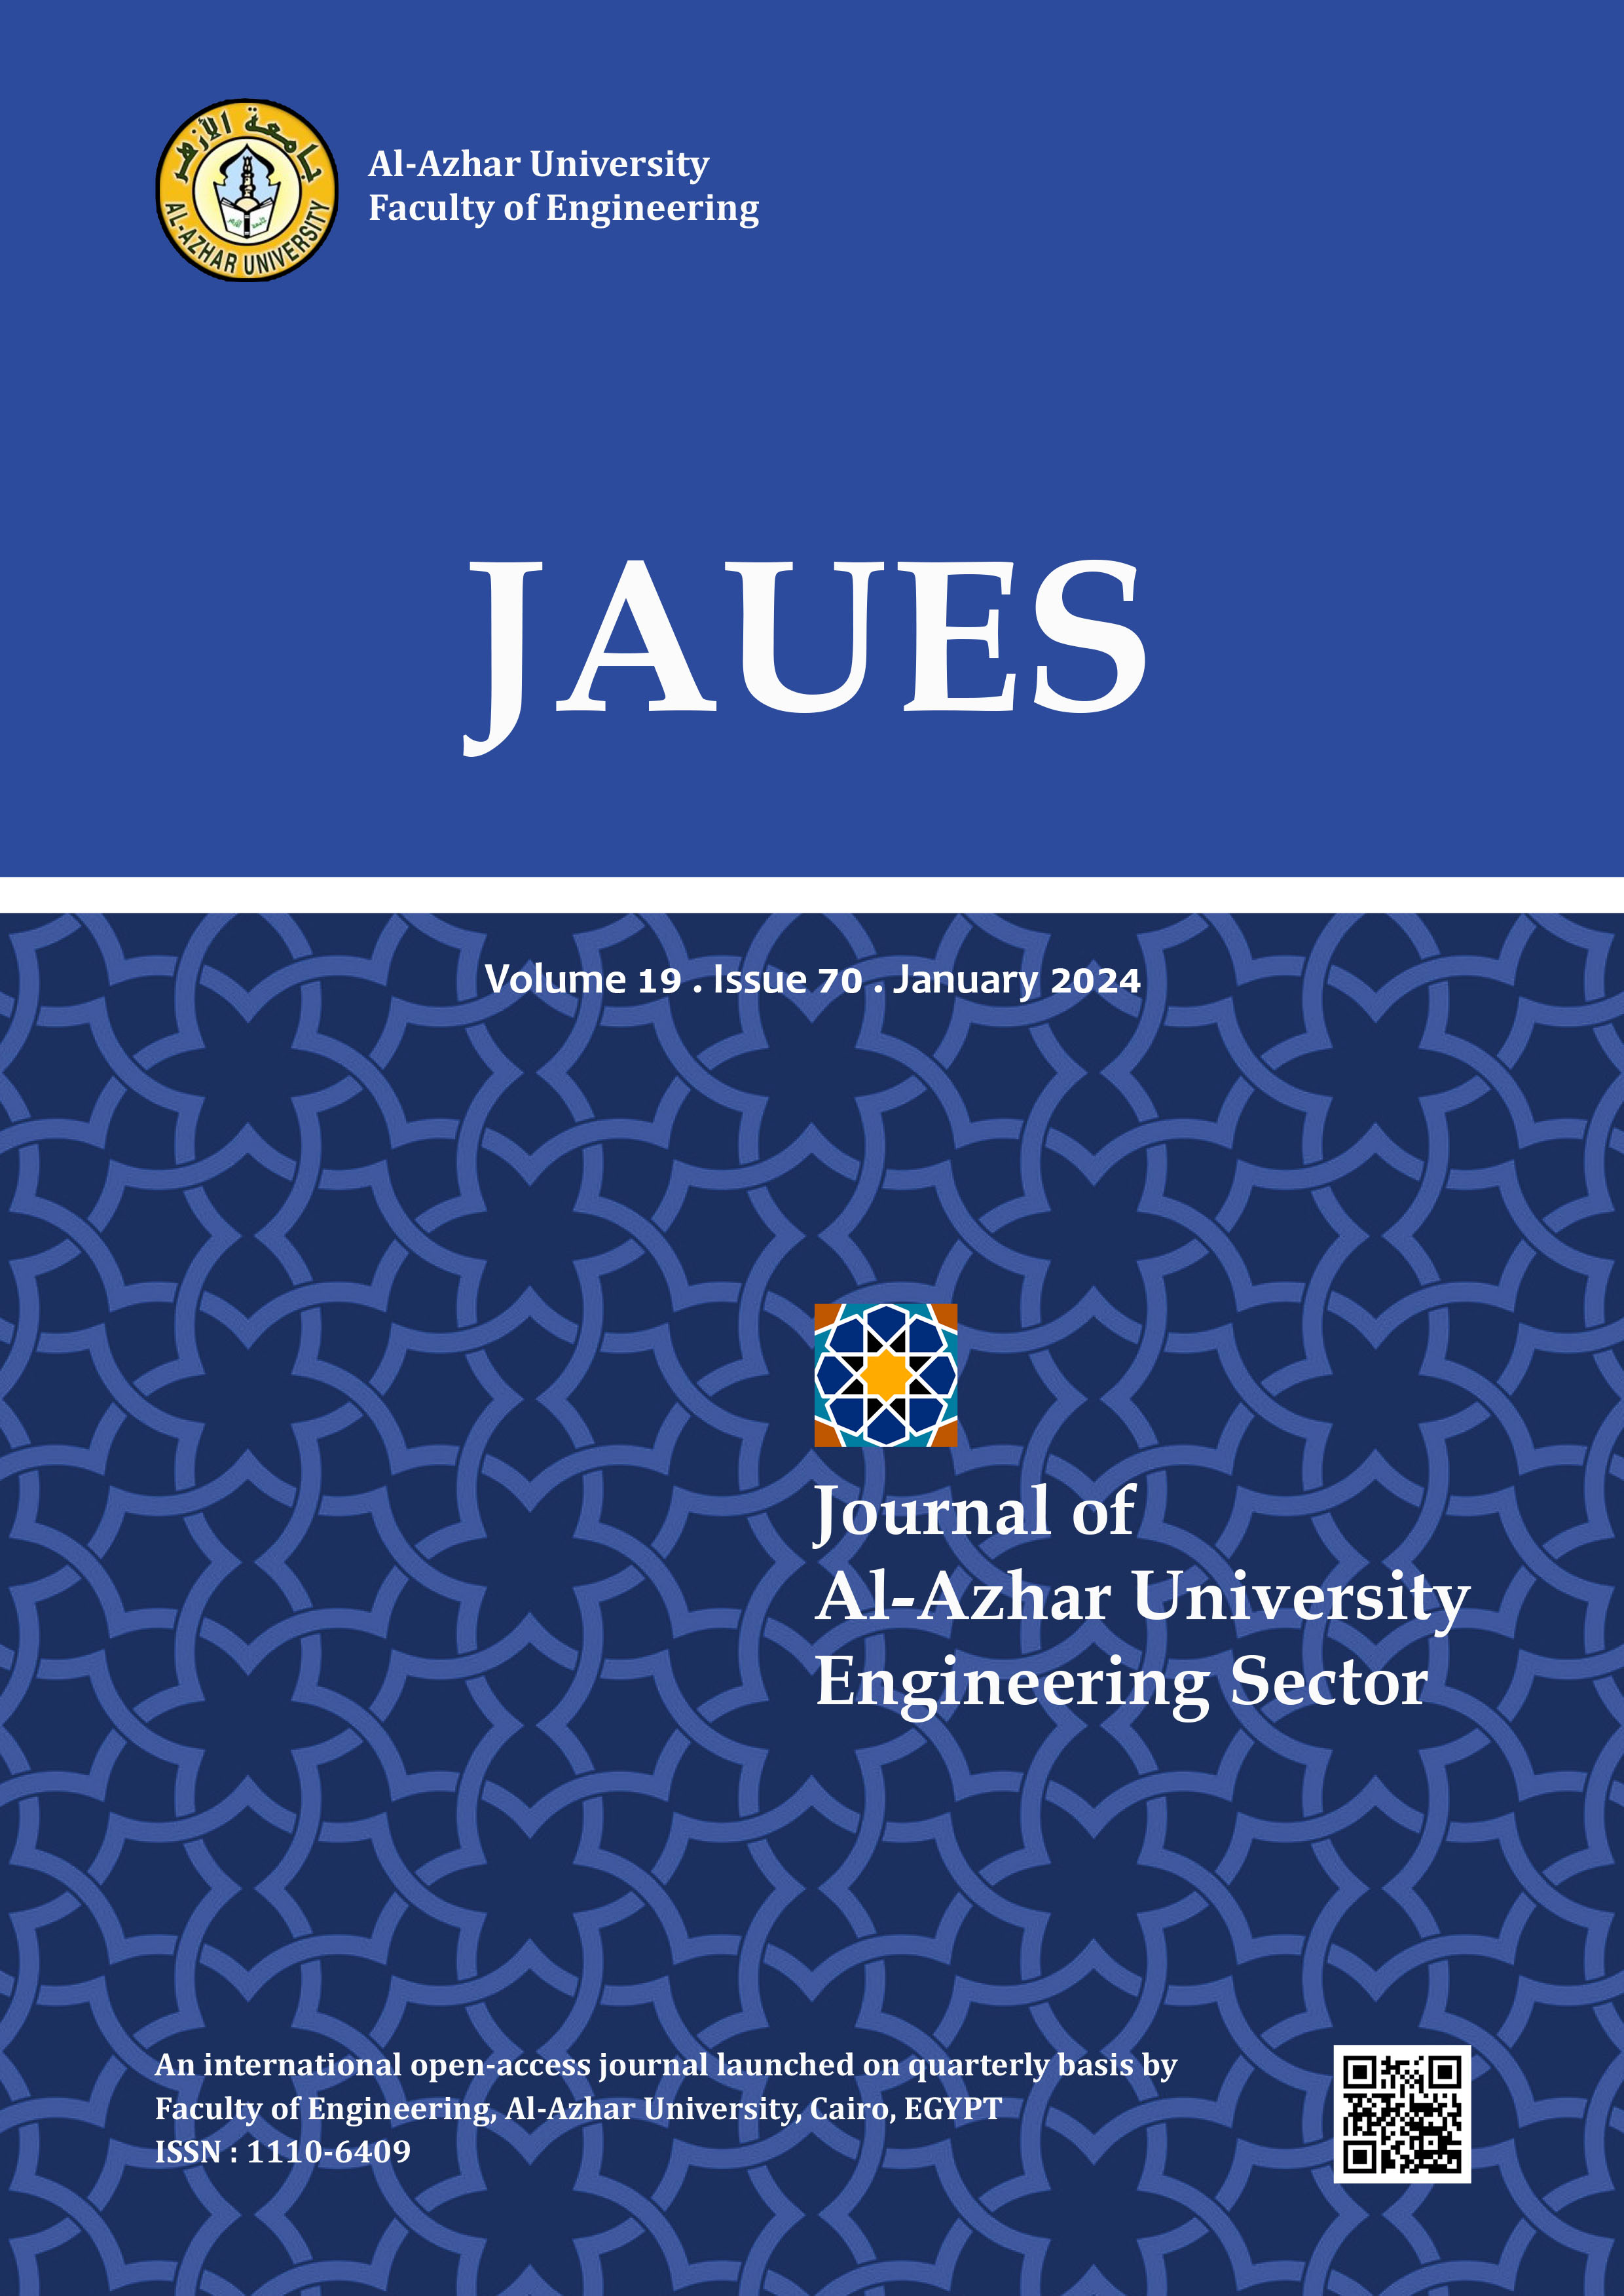 Journal of Al-Azhar University Engineering Sector